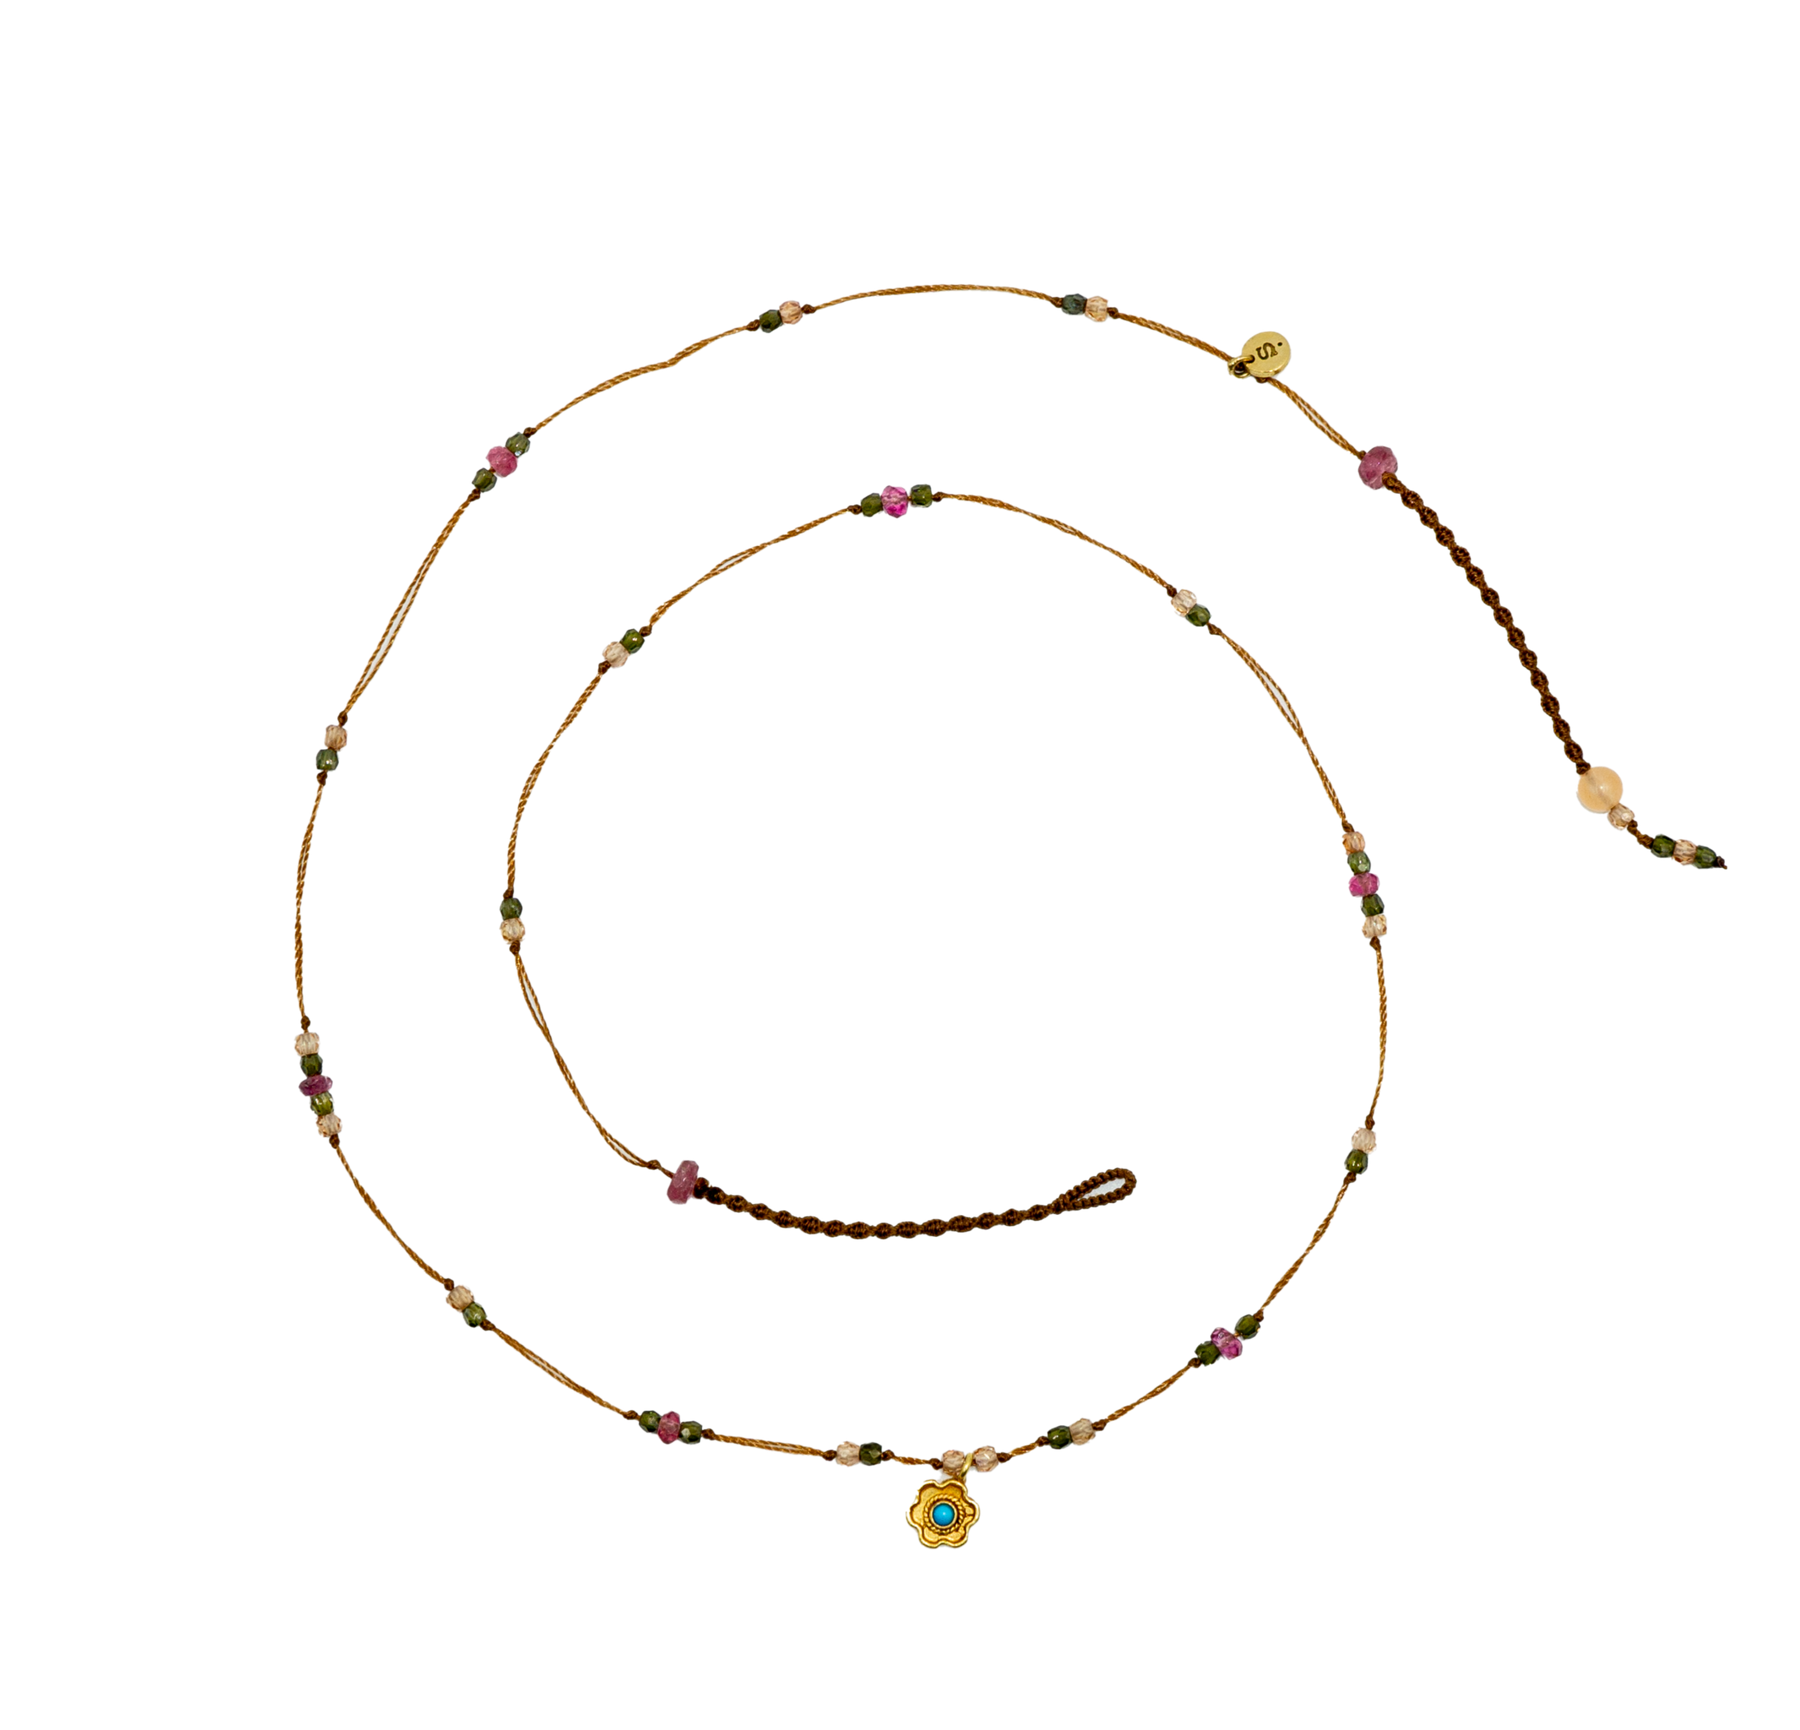 Goldie Flower Necklace - Turquoise - Mix Pink Tourmaline - Tobacco Thread